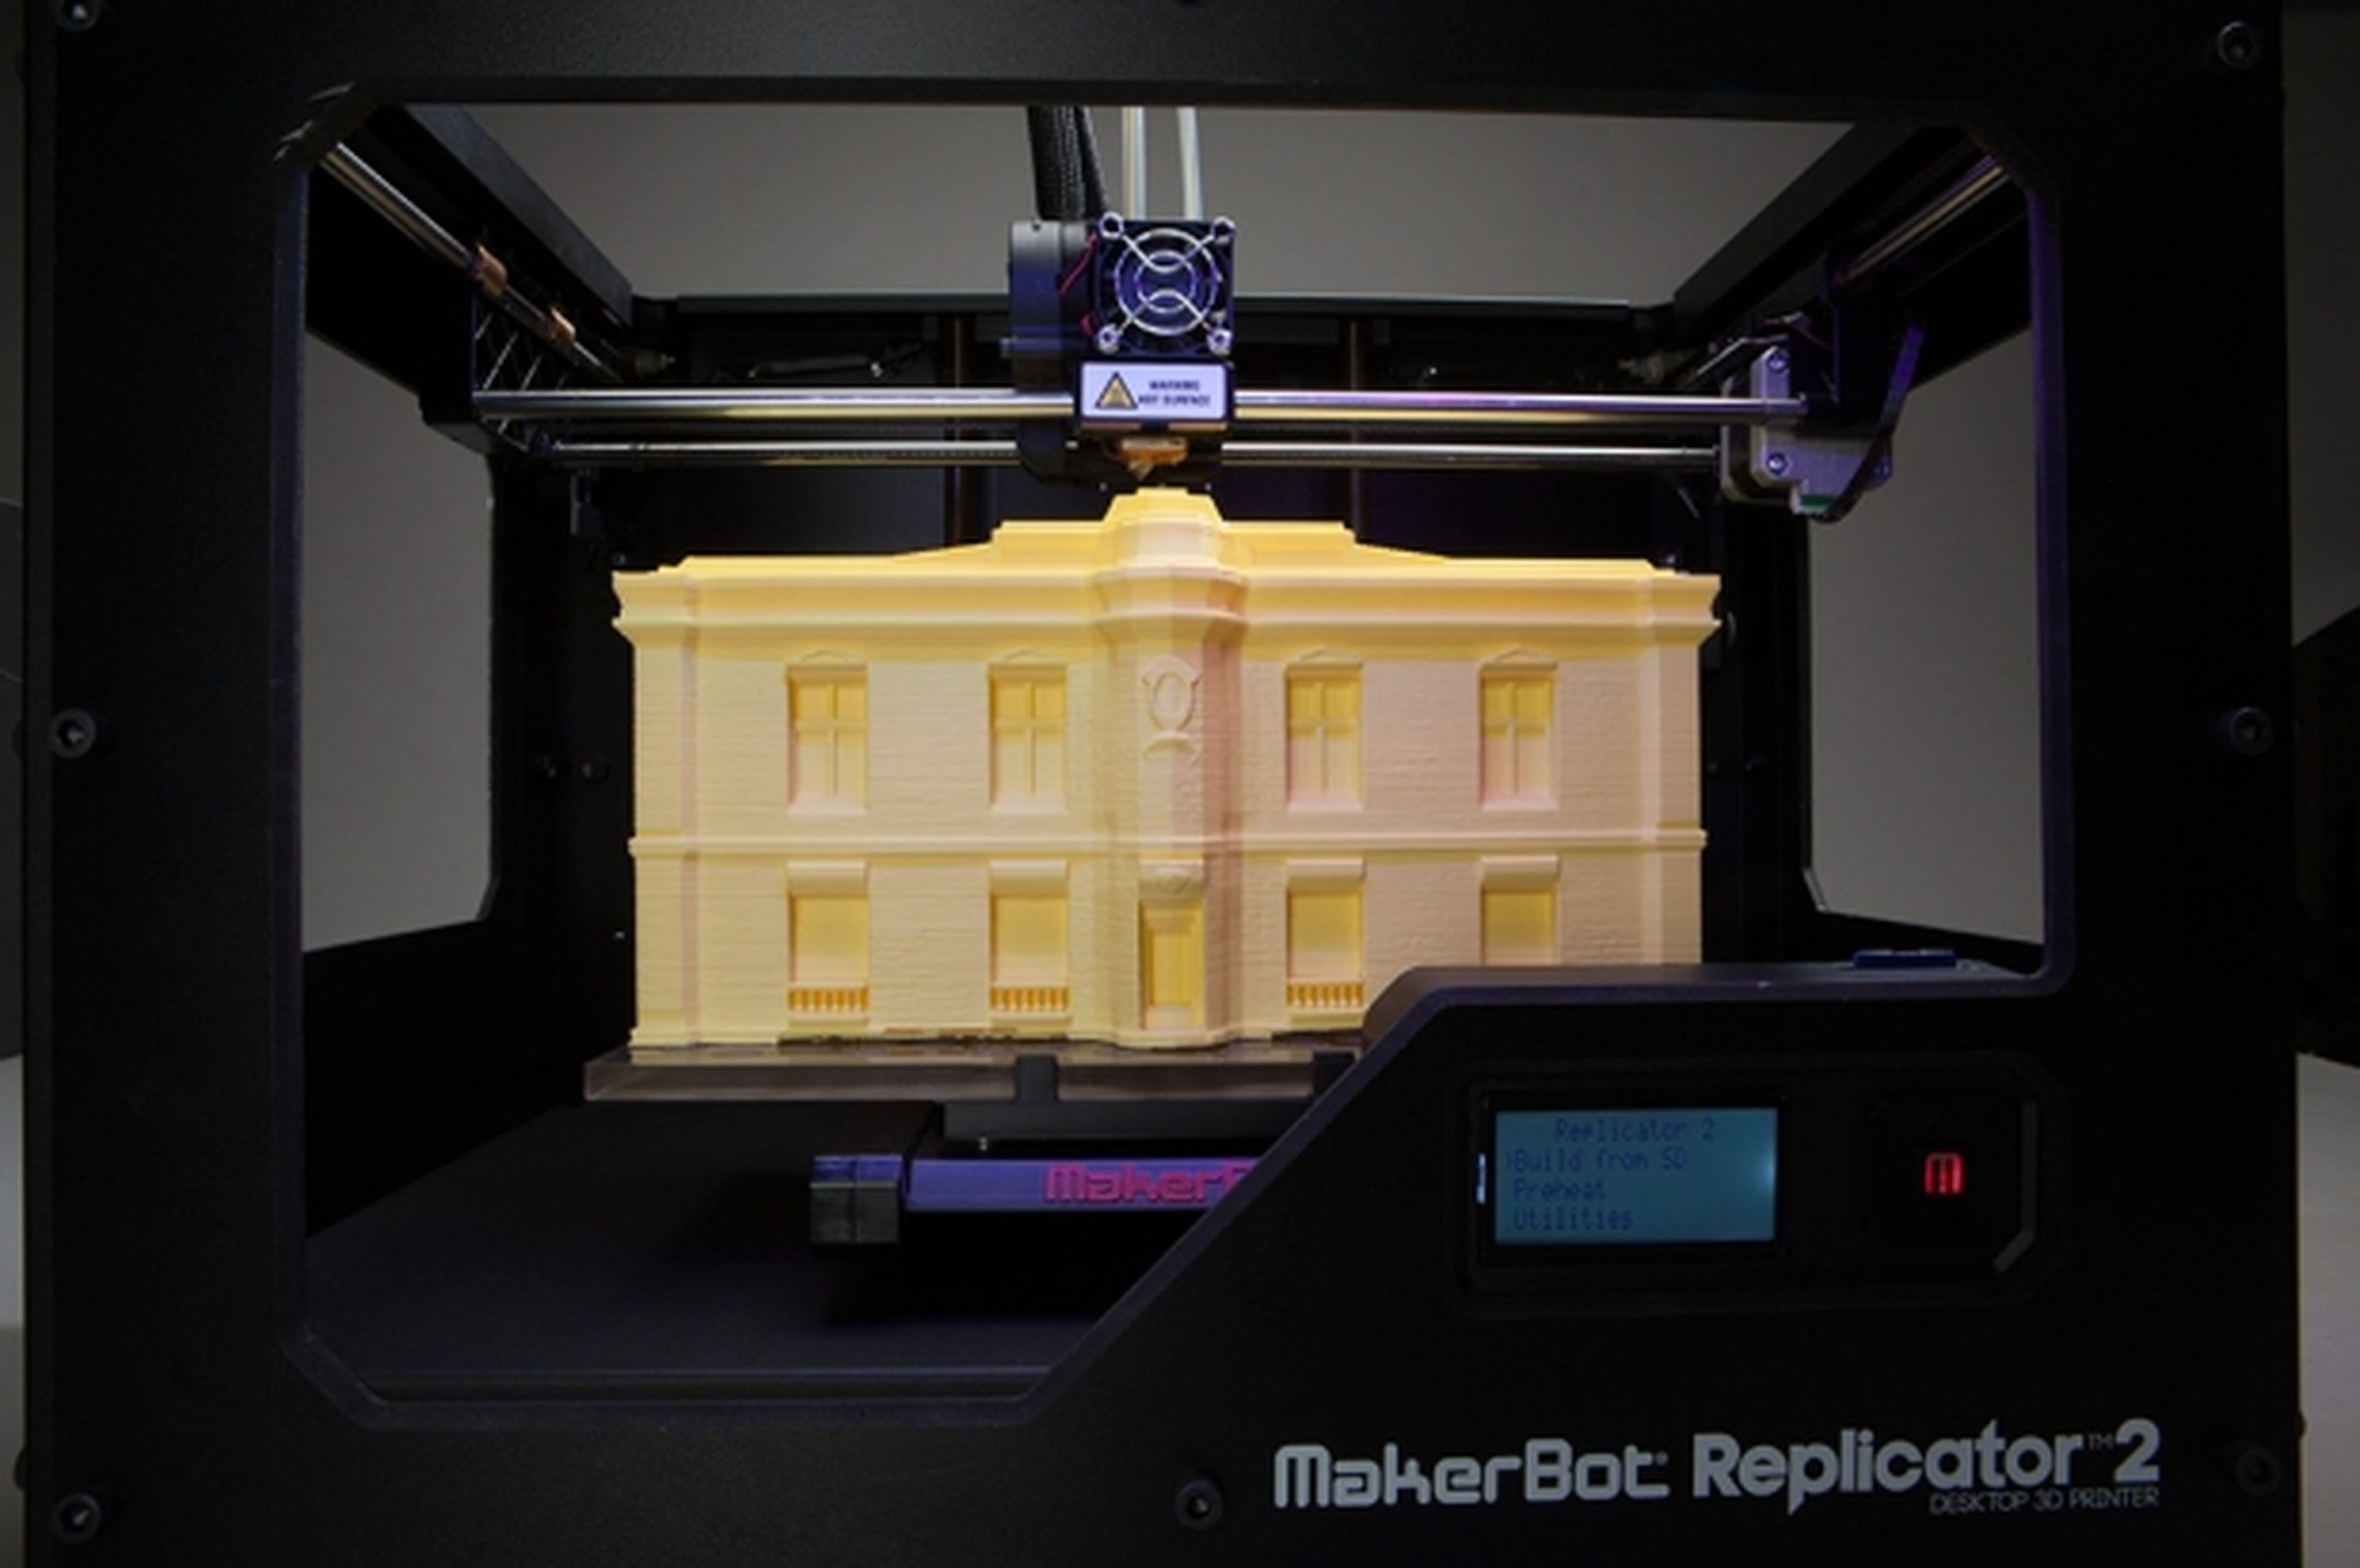 bq distribuye en España la impresora 3D MakerBot Replicator 2